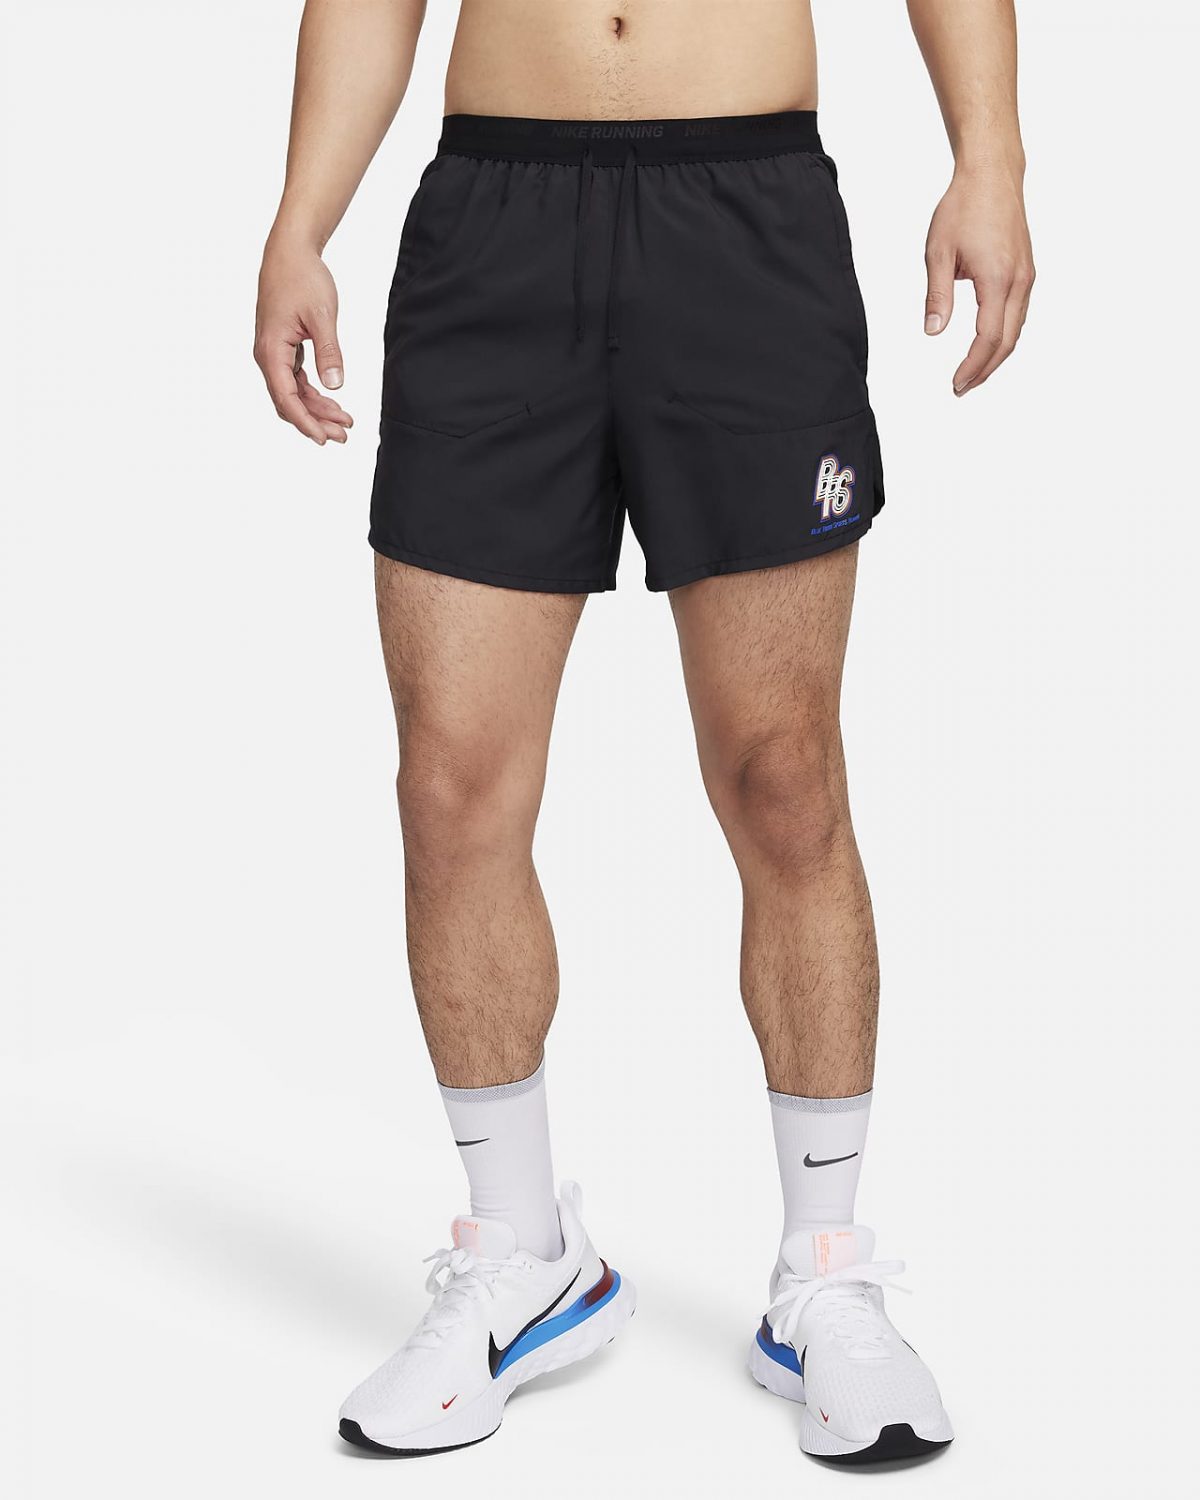 Мужские шорты Nike Running Energy Stride фото